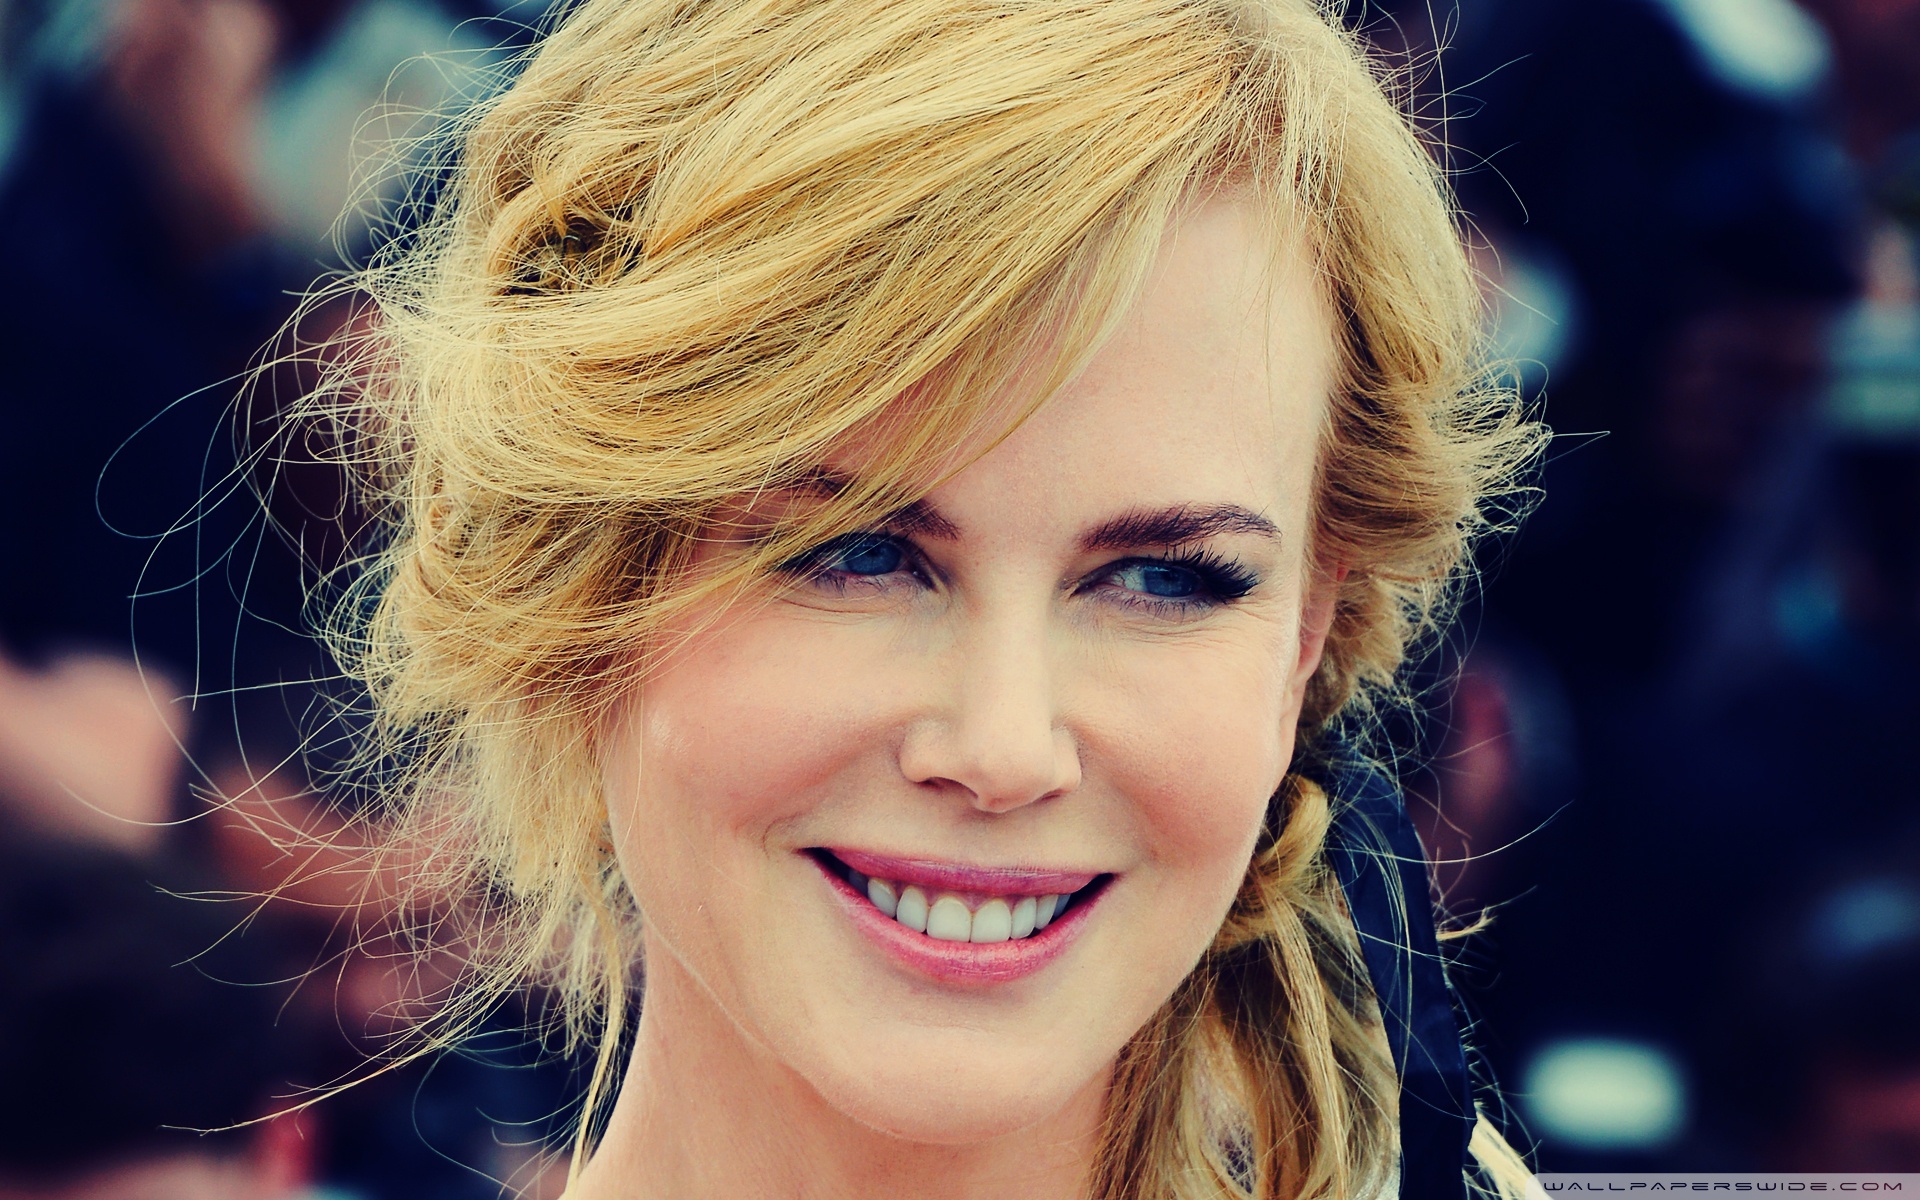 Nicole Kidman Wallpaper X